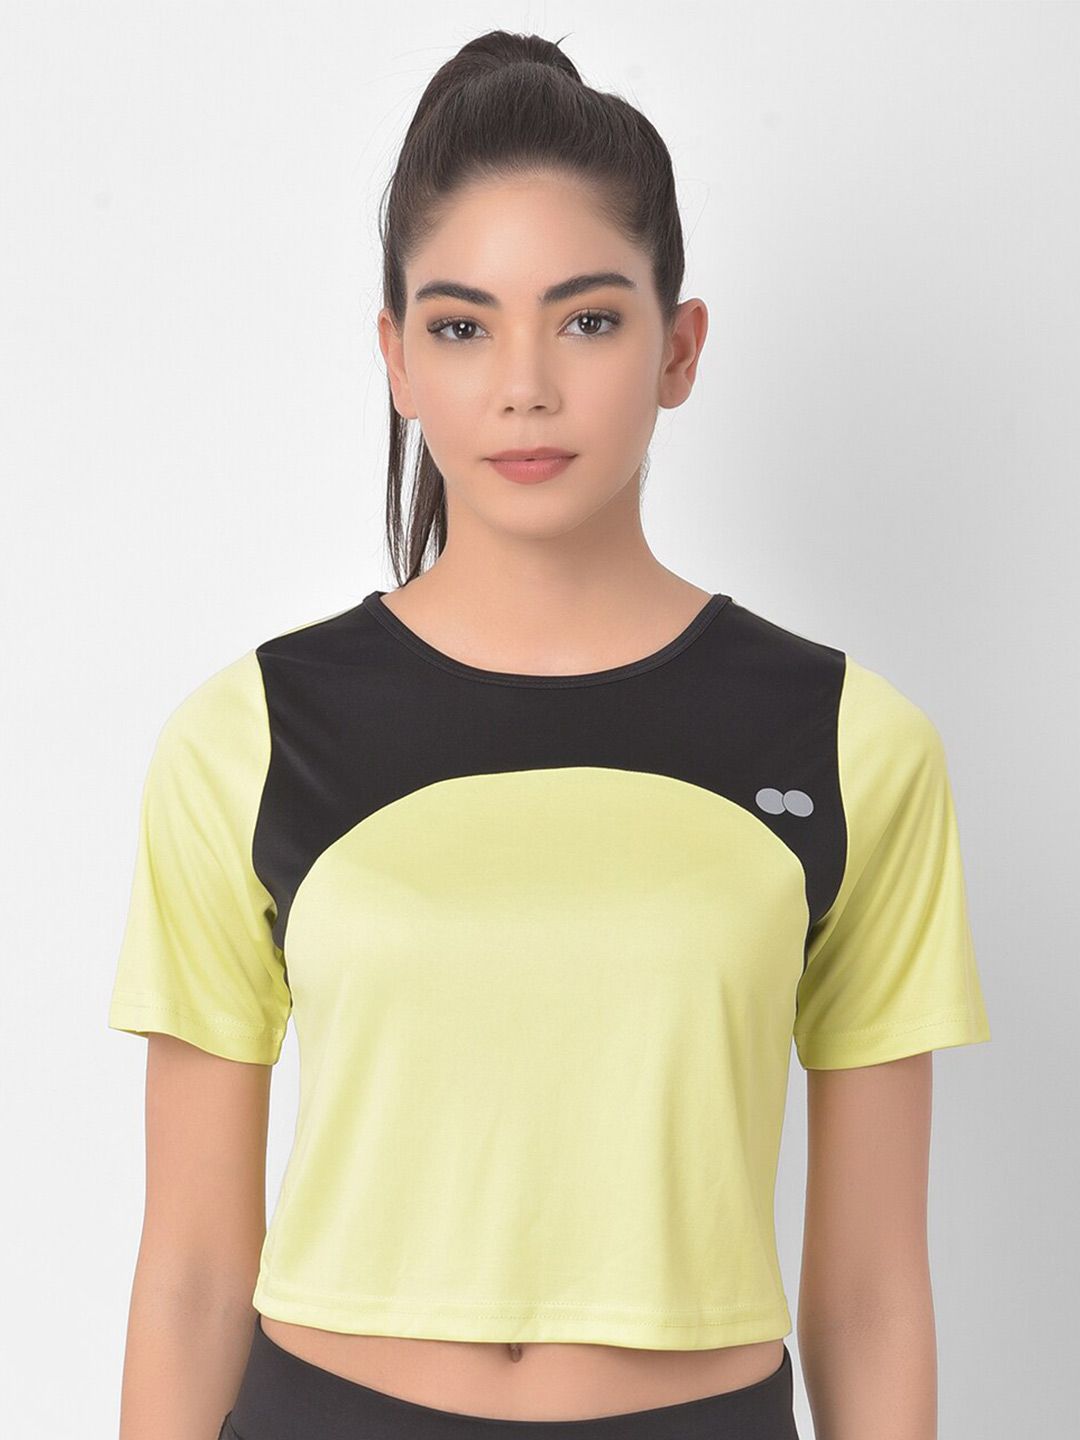 Clovia Women Yellow & Black Colourblocked Training or Gym T-shirt Price in India